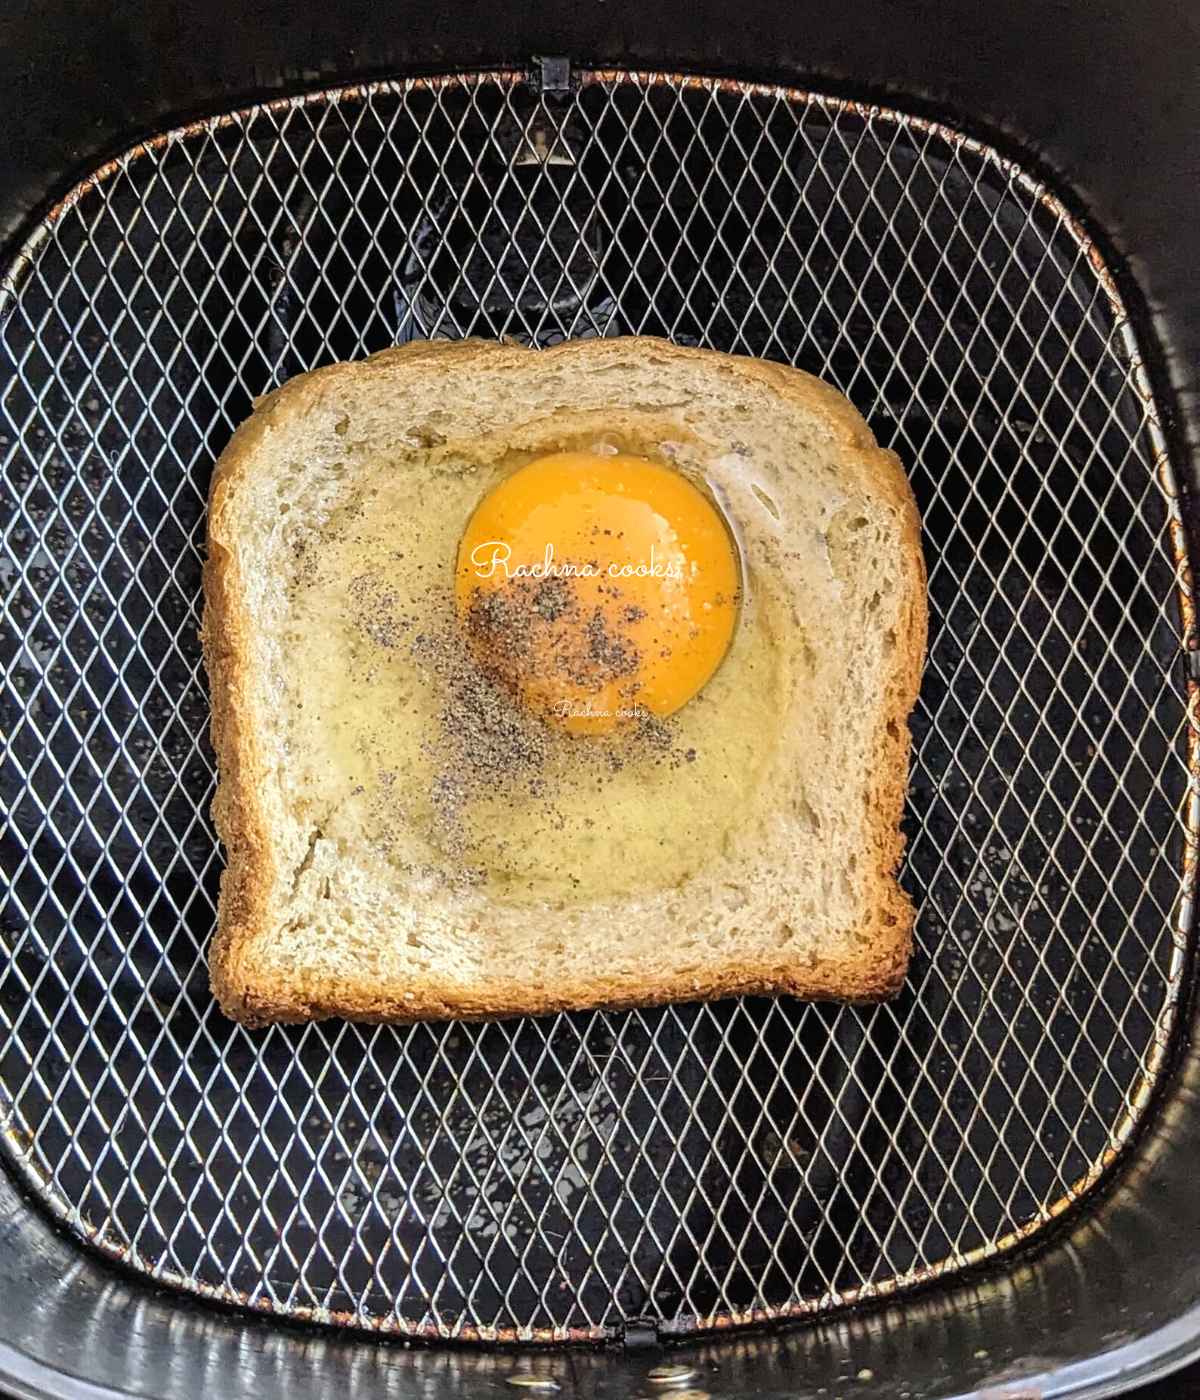 One slice of bread with a broken egg, salt and pepper on air fryer basket